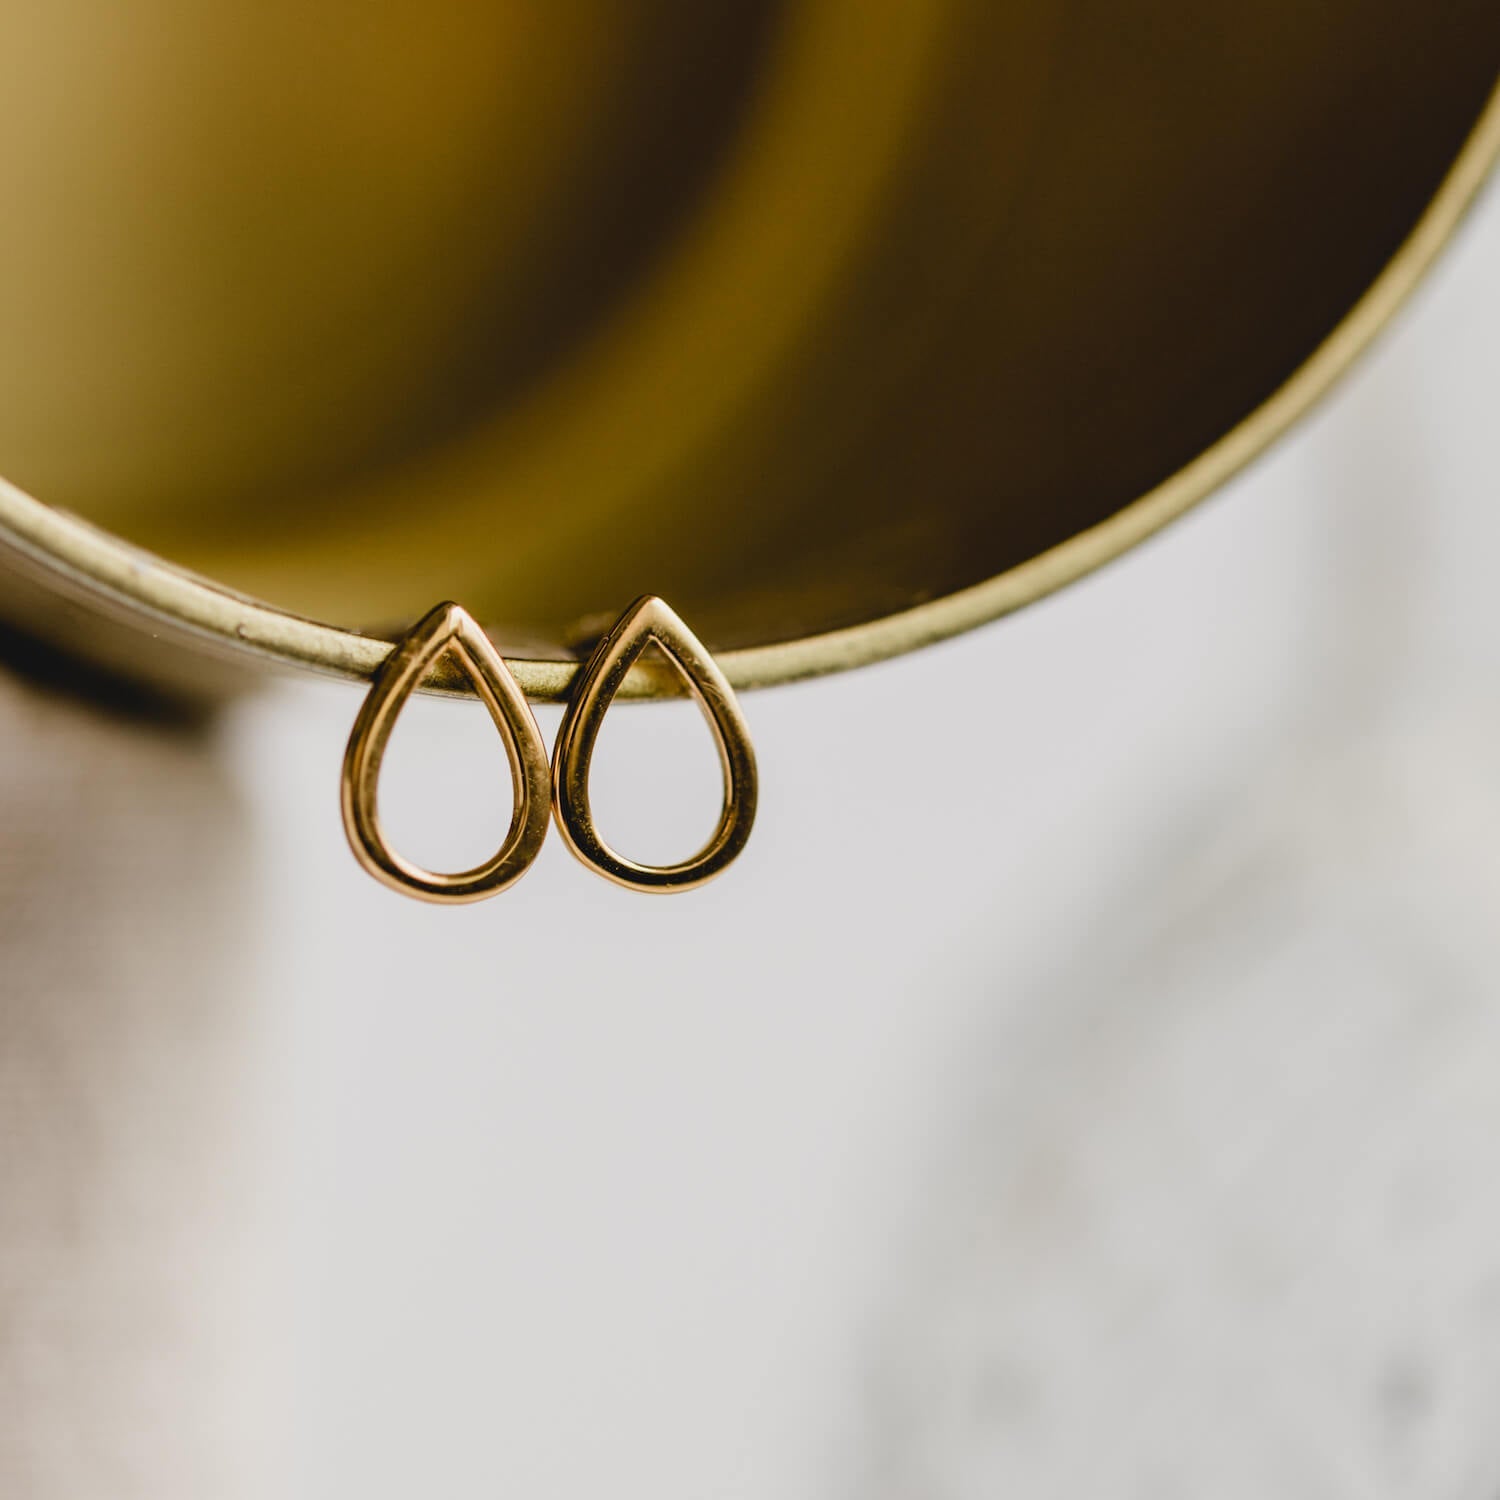 Close up of two gold teardrop earrings